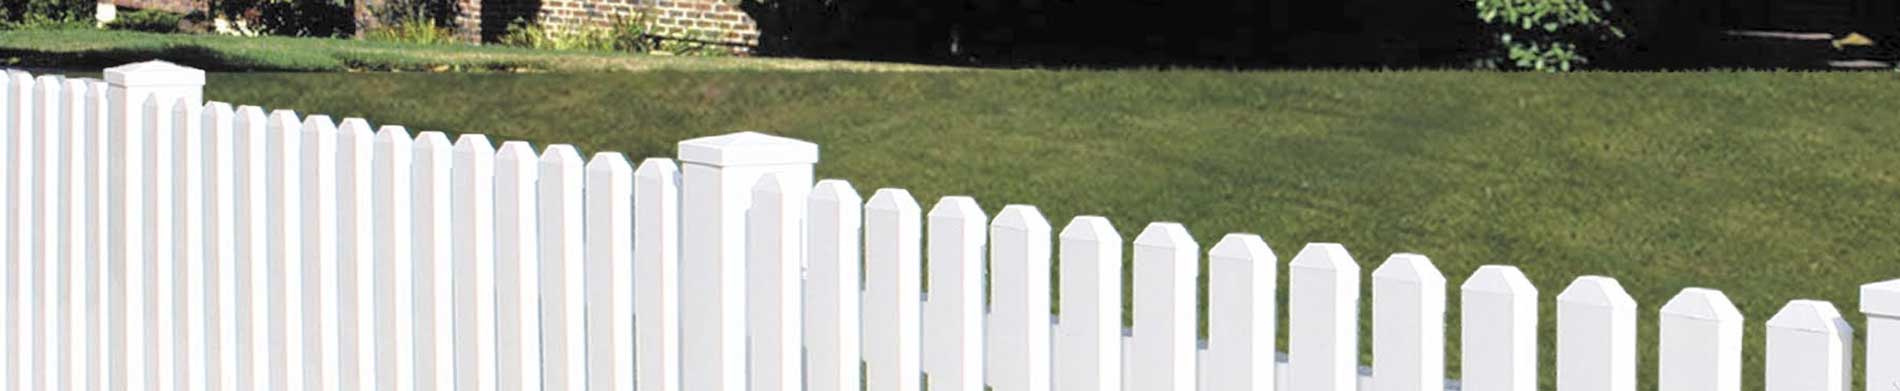 backyard vinyl fencing manufacturers